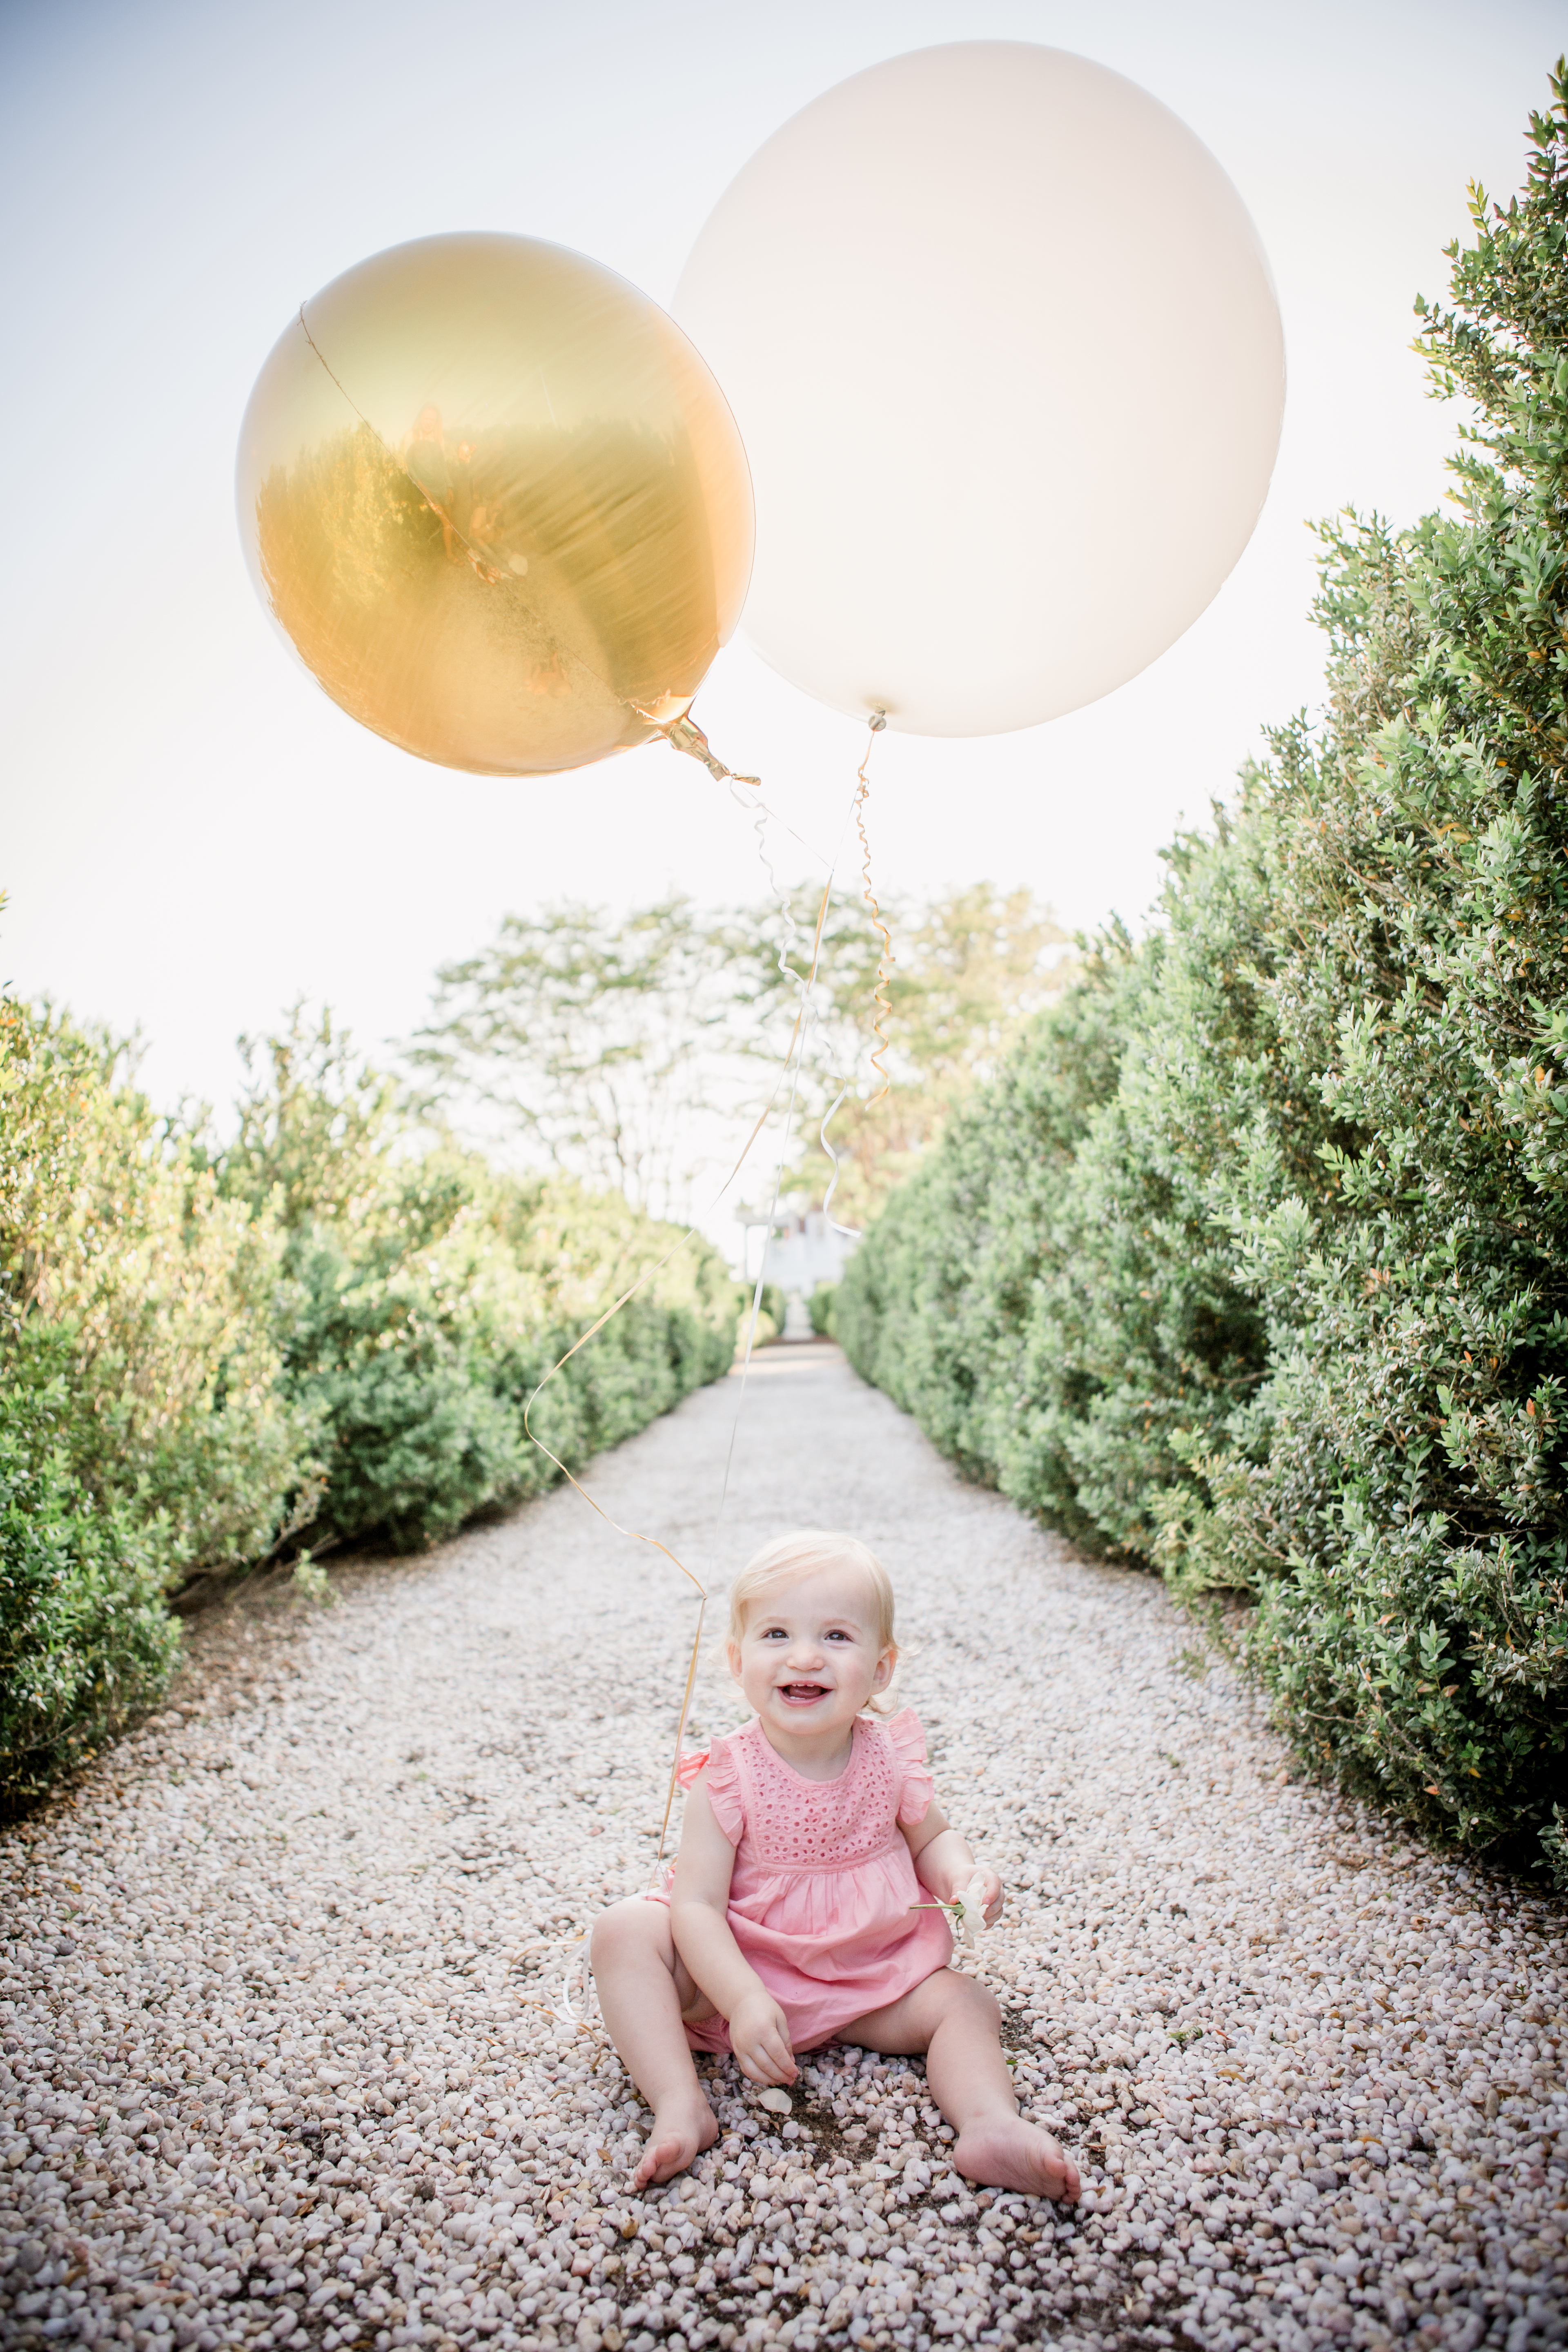 Balloons by Knoxville Wedding Photographer, Amanda May Photos.